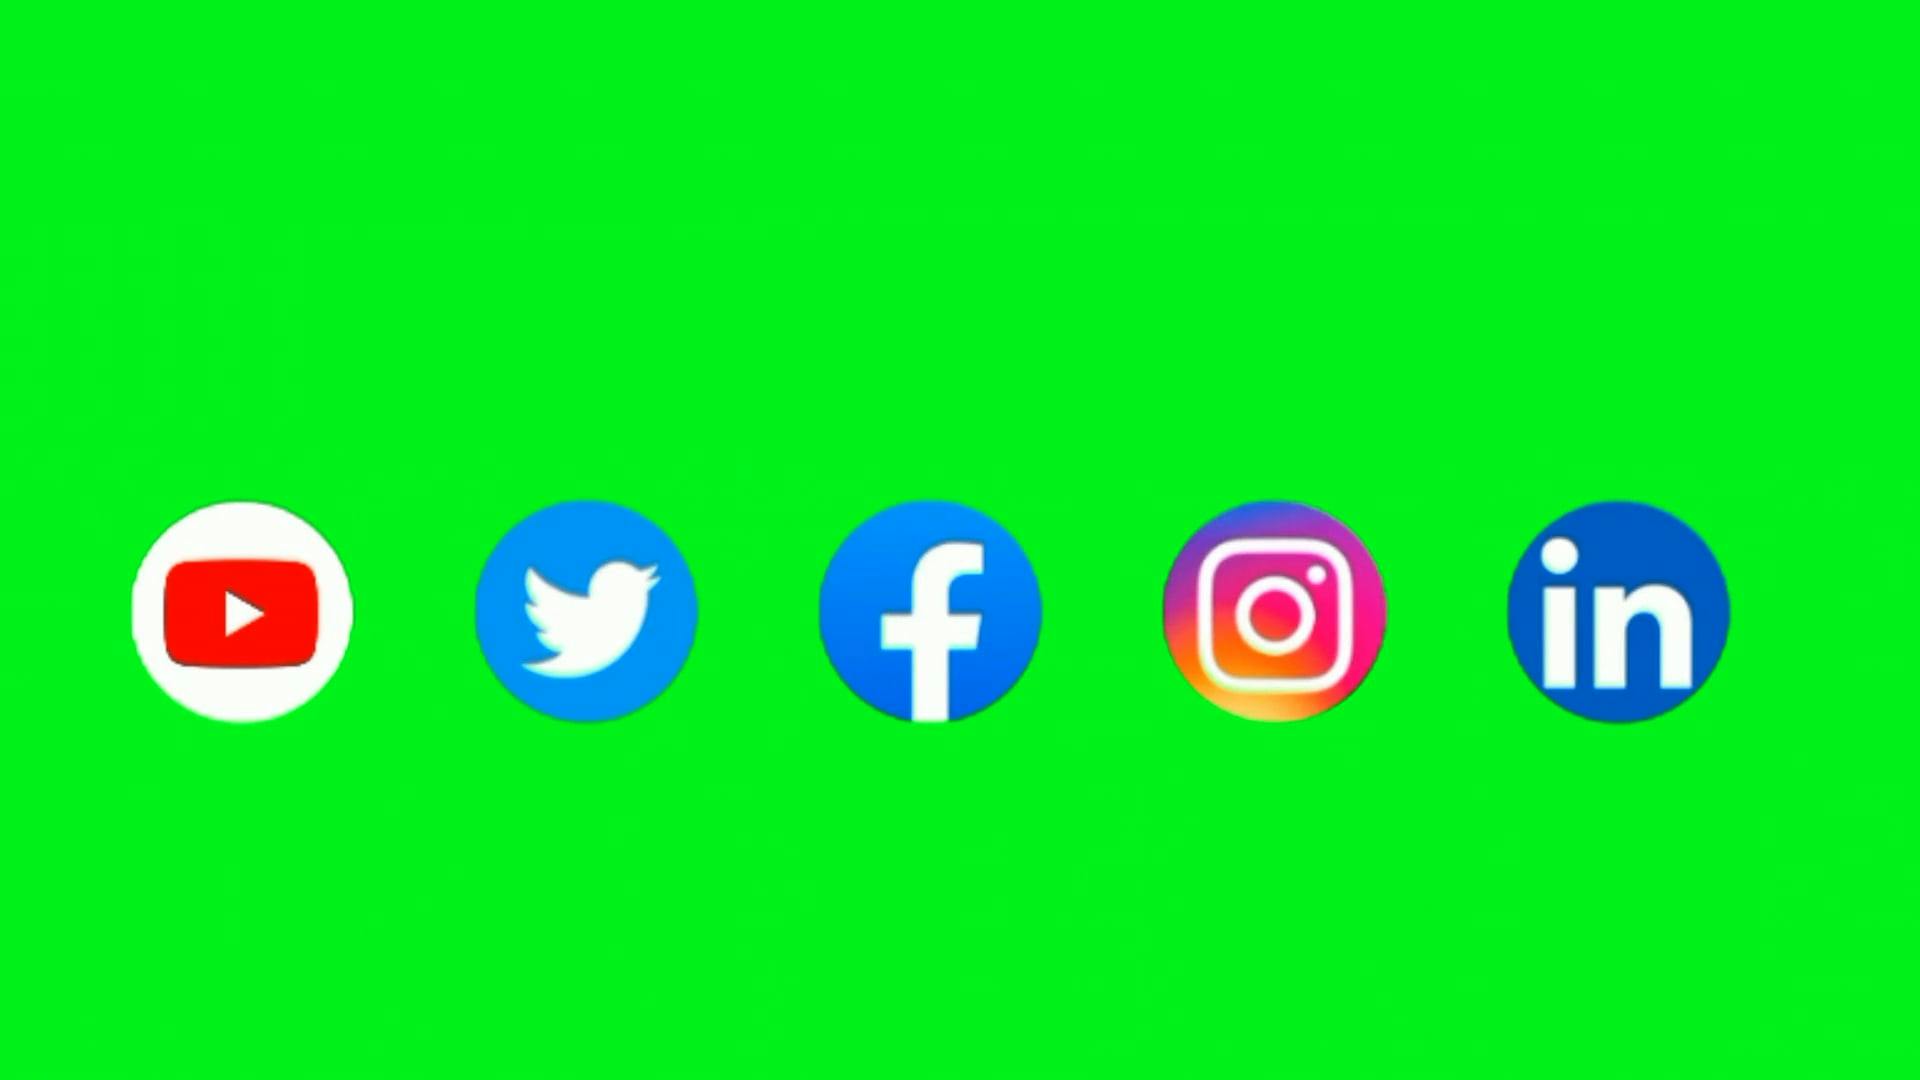 Tela Verde Redes Sociais FREE (Facebook, Instagram, Twitter) 2019 - YouTube  | First youtube video ideas, Instagram logo, Youtube logo